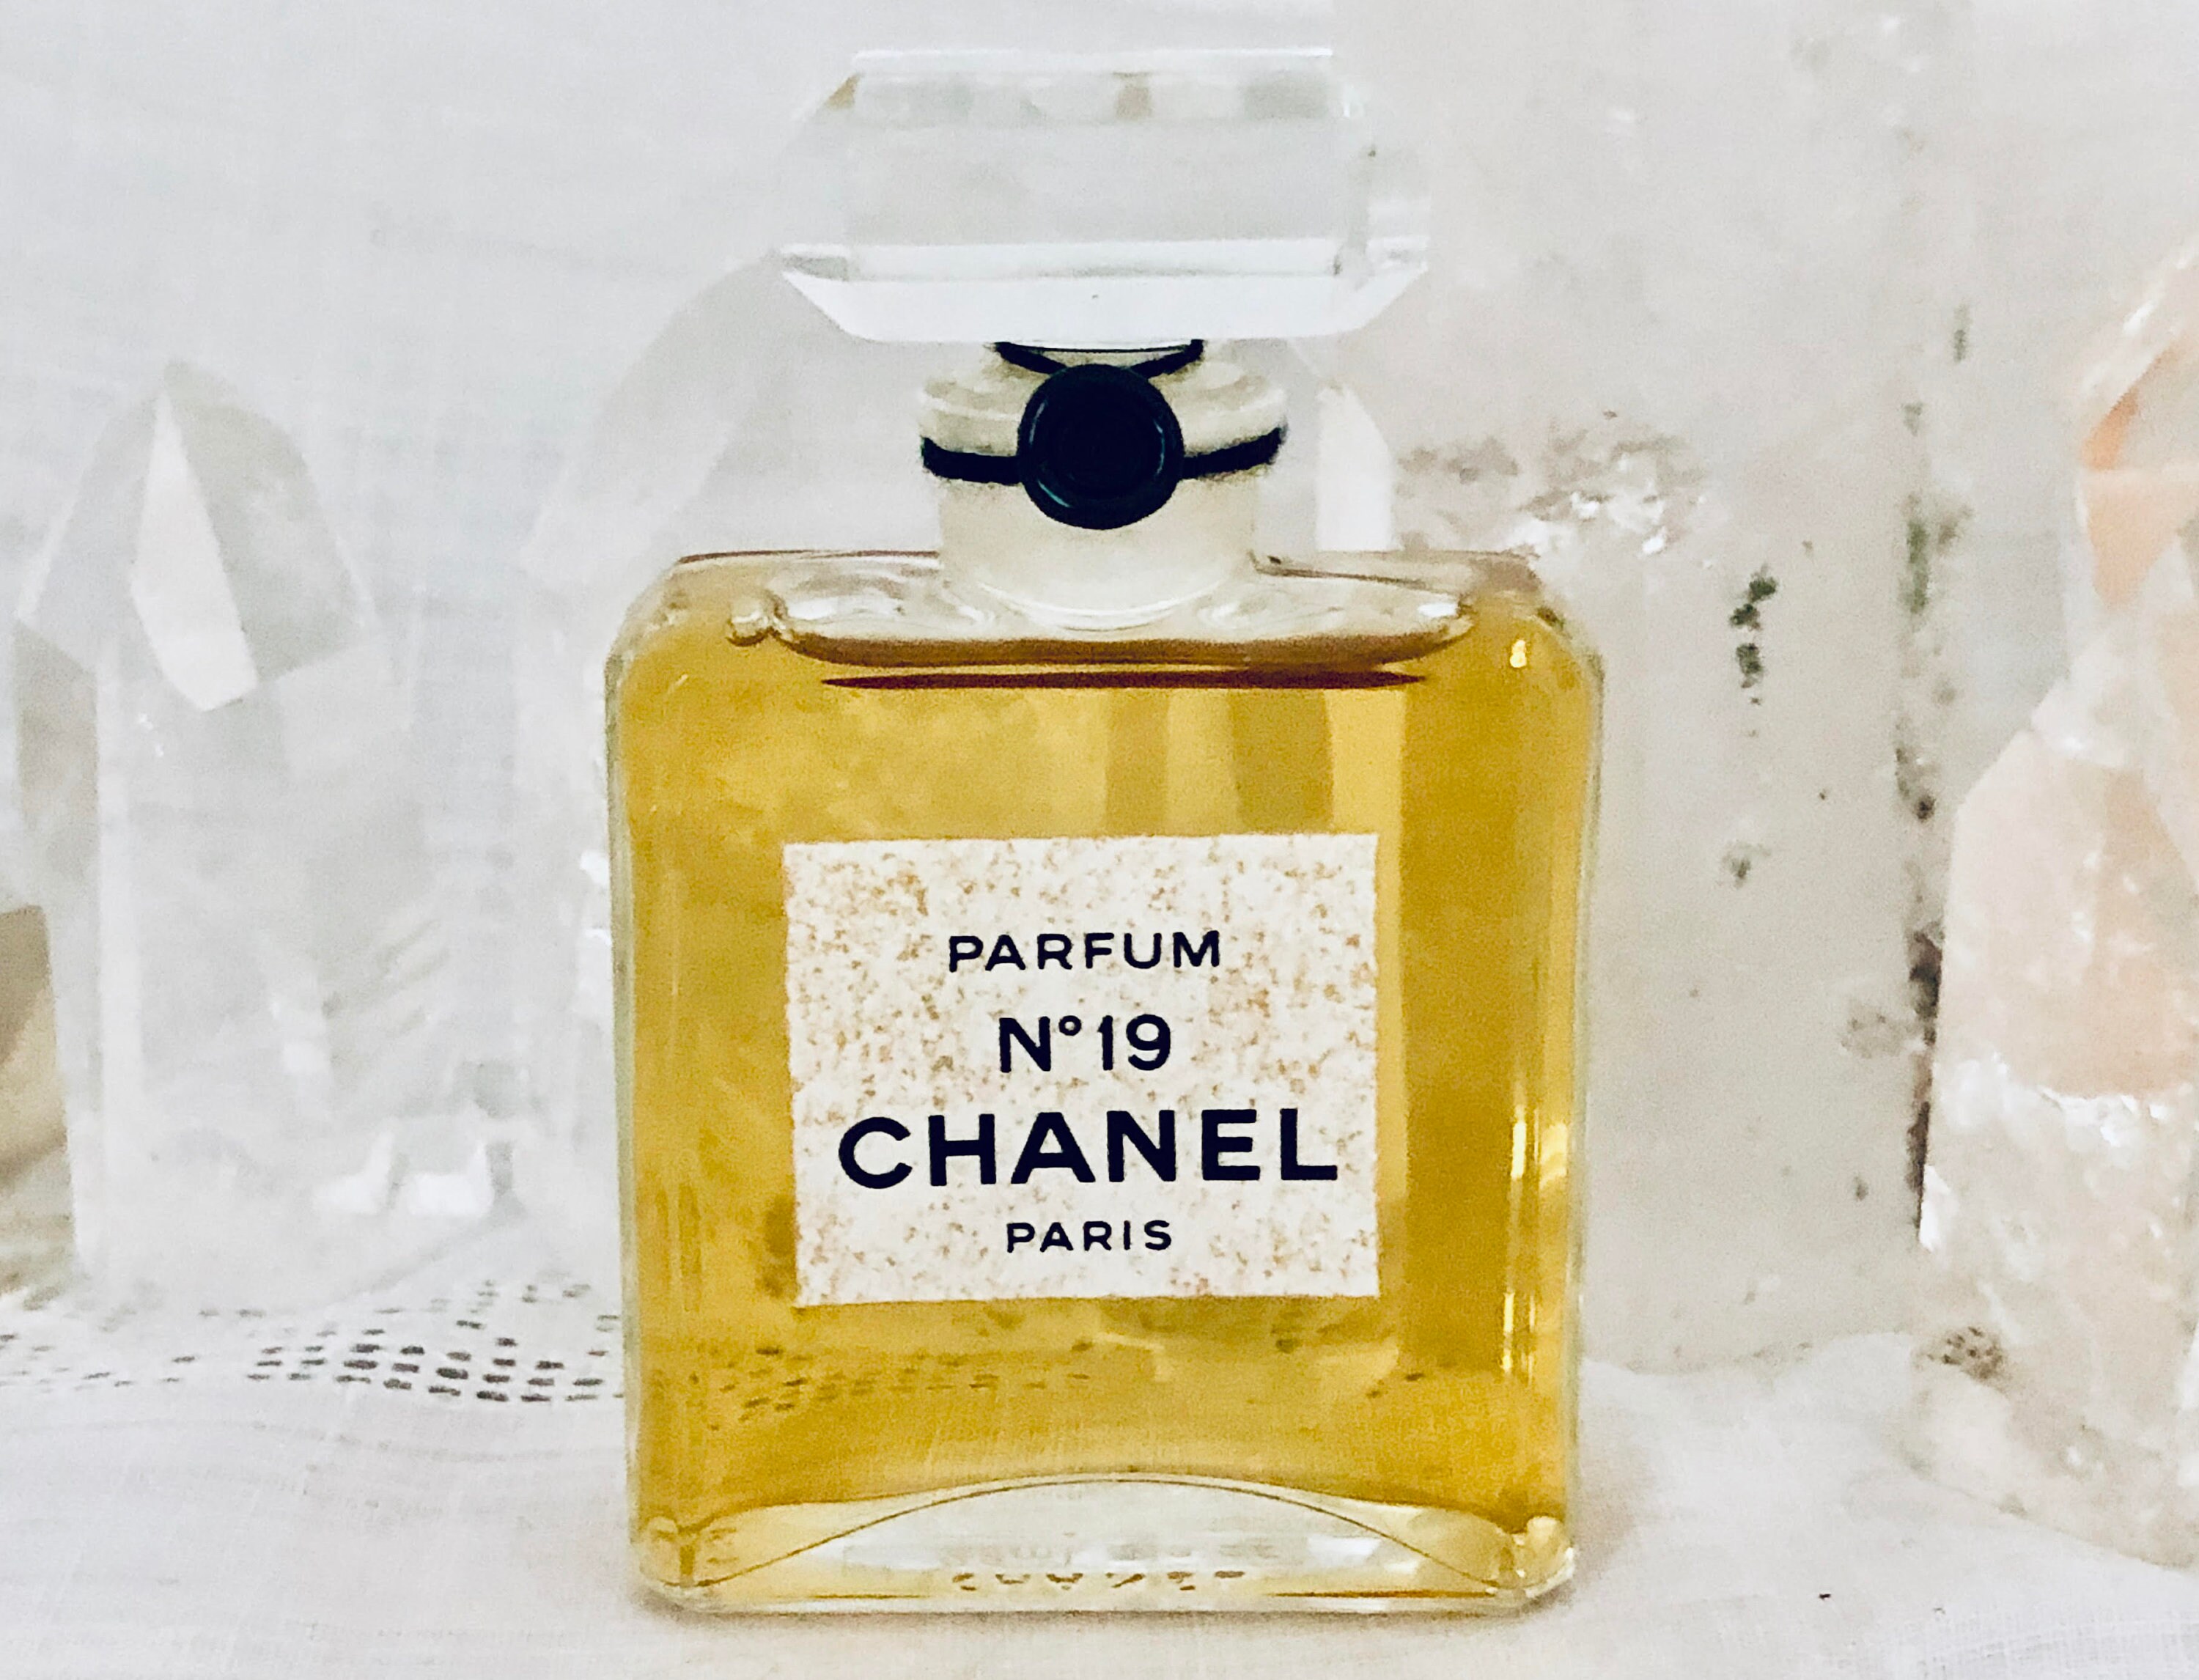 chanel no 5 perfume for women 100ml